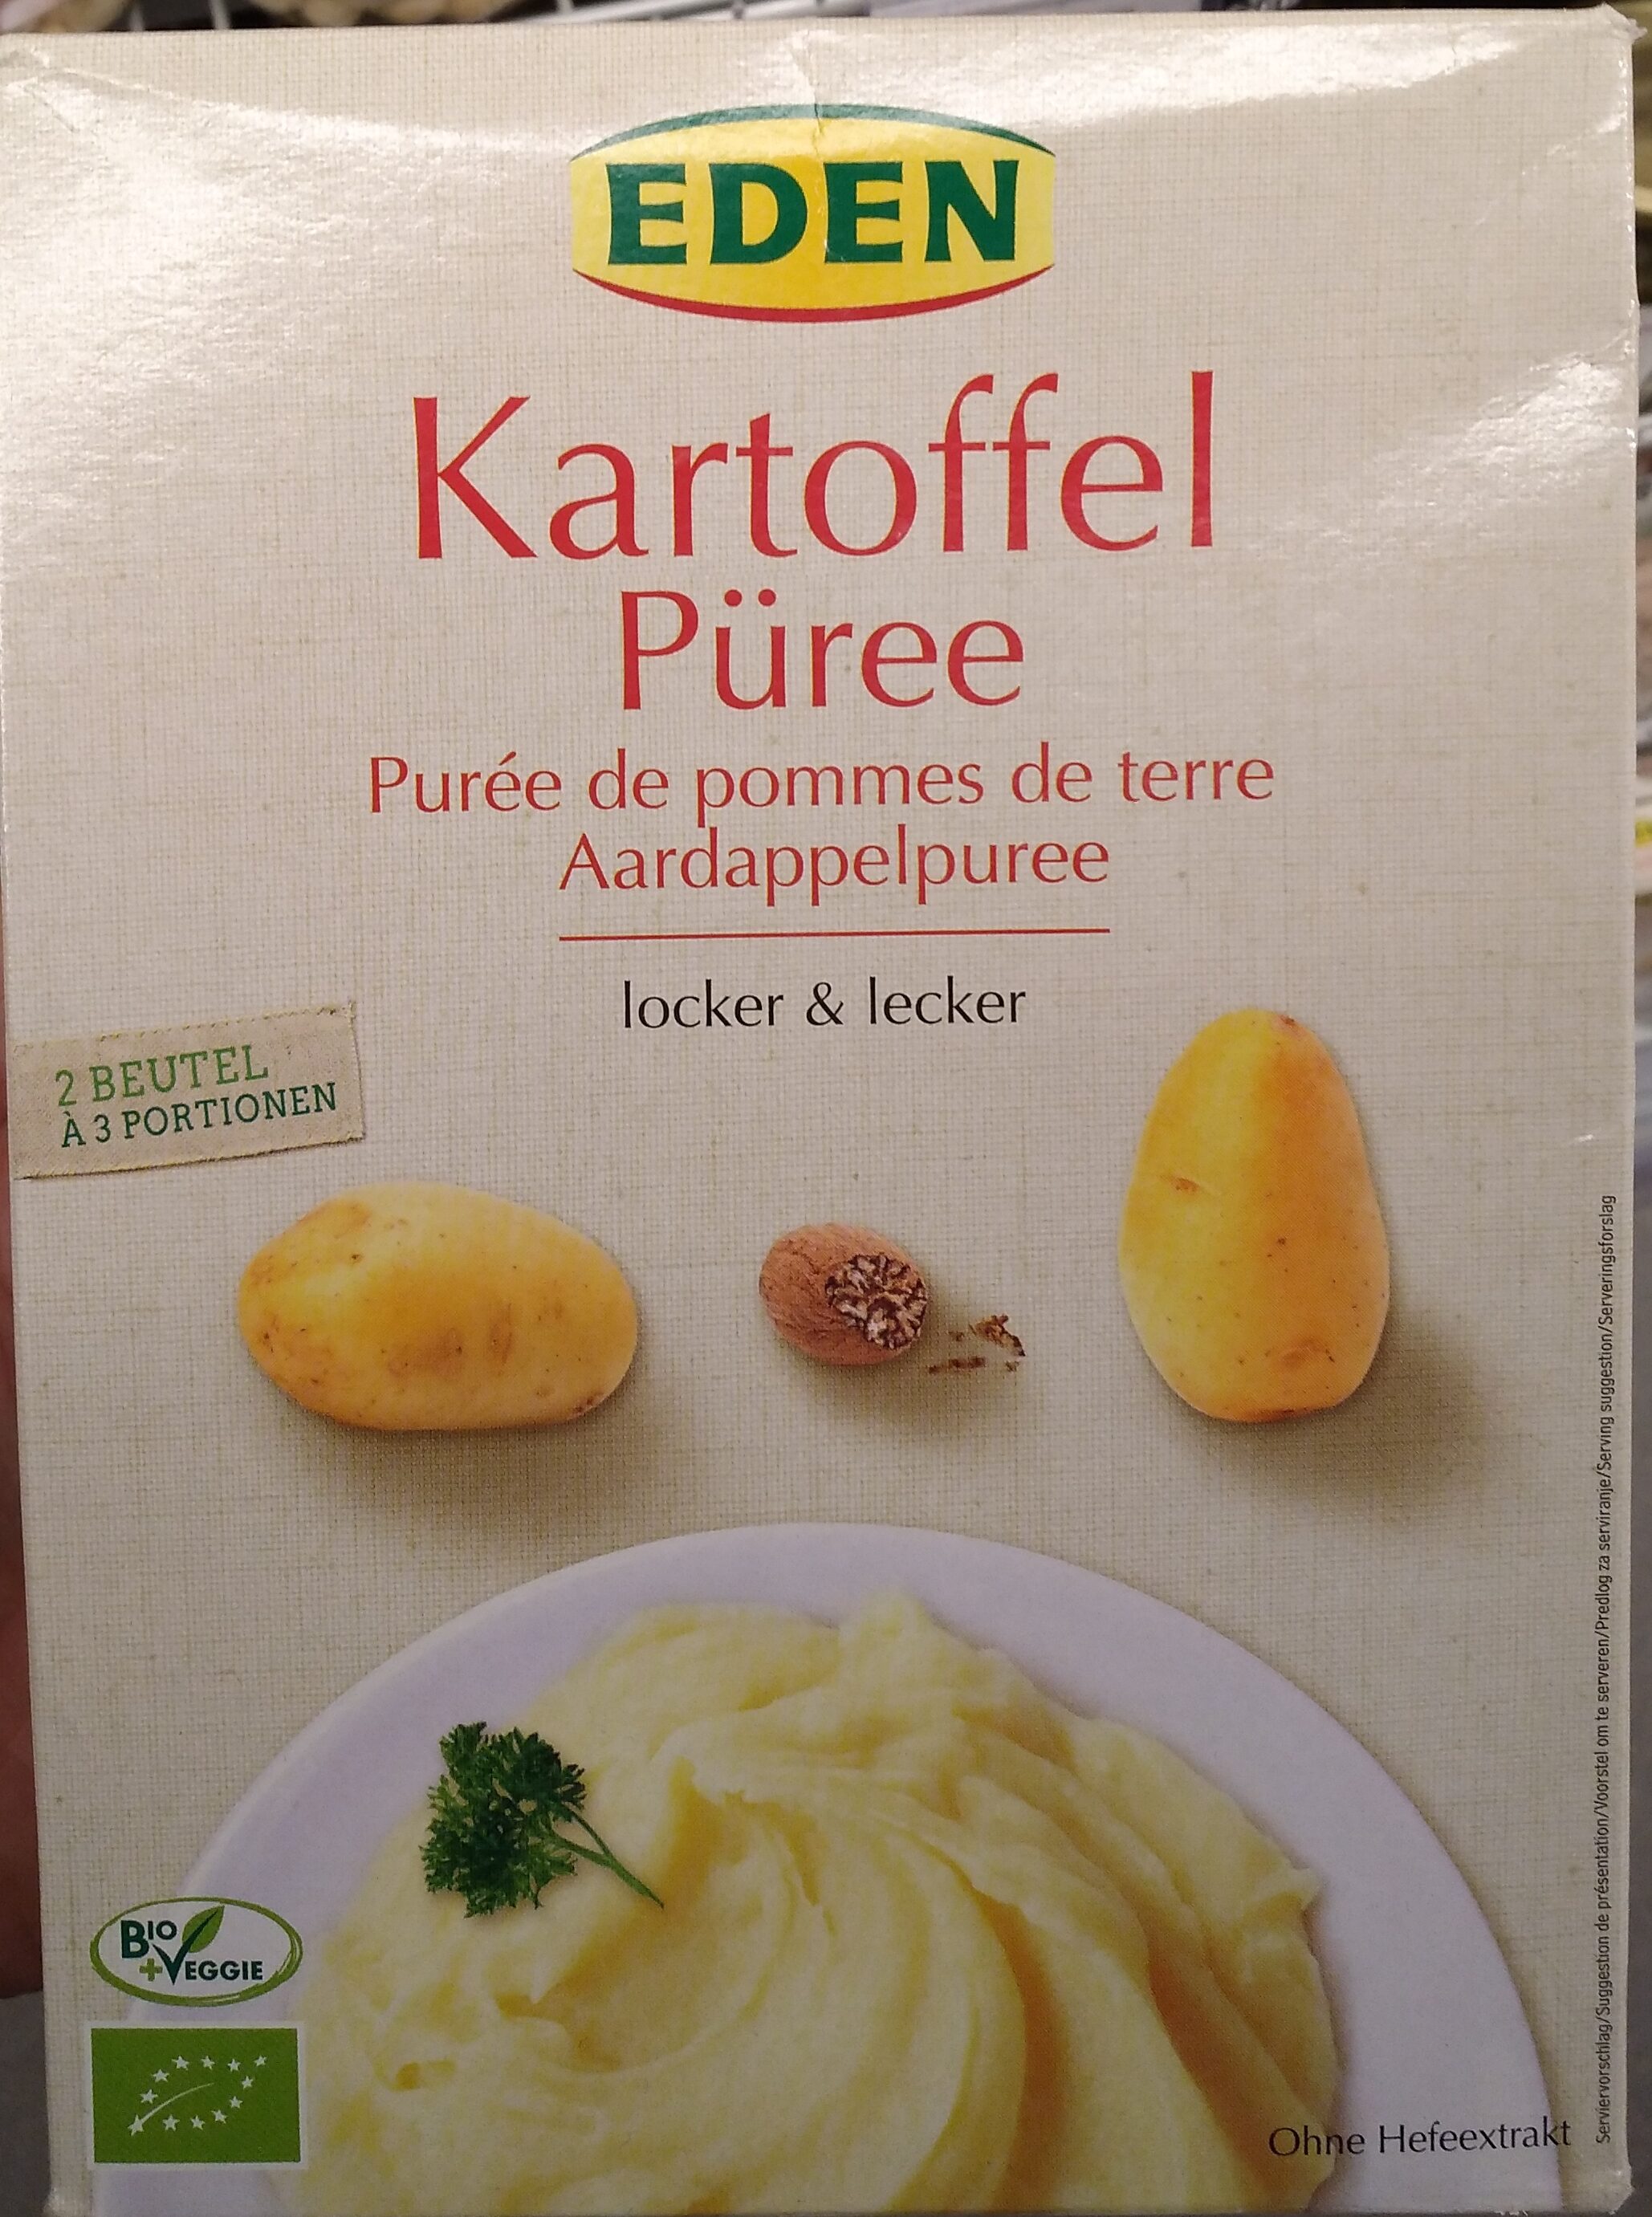 Kartoffel püree - Product